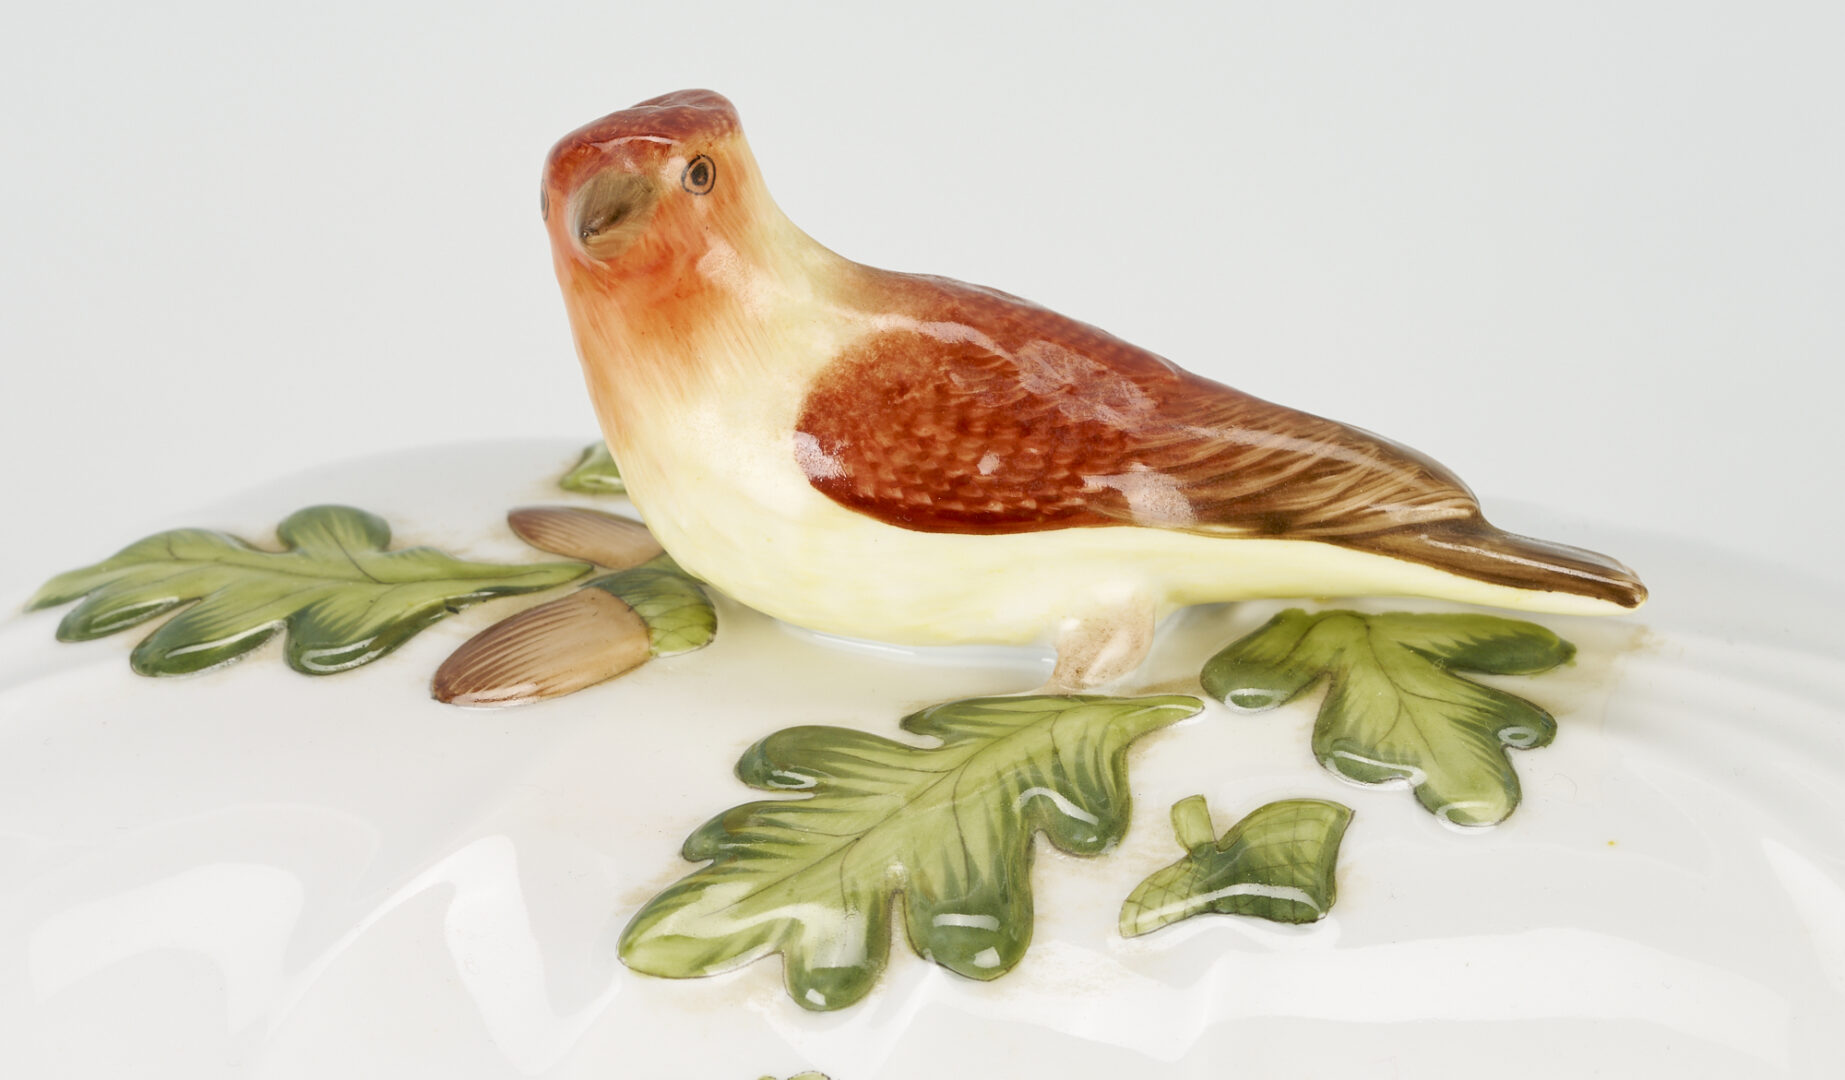 Lot 227: 2 Herend Rothschild Bird Porcelain Items, Oval Tureen & Lamp